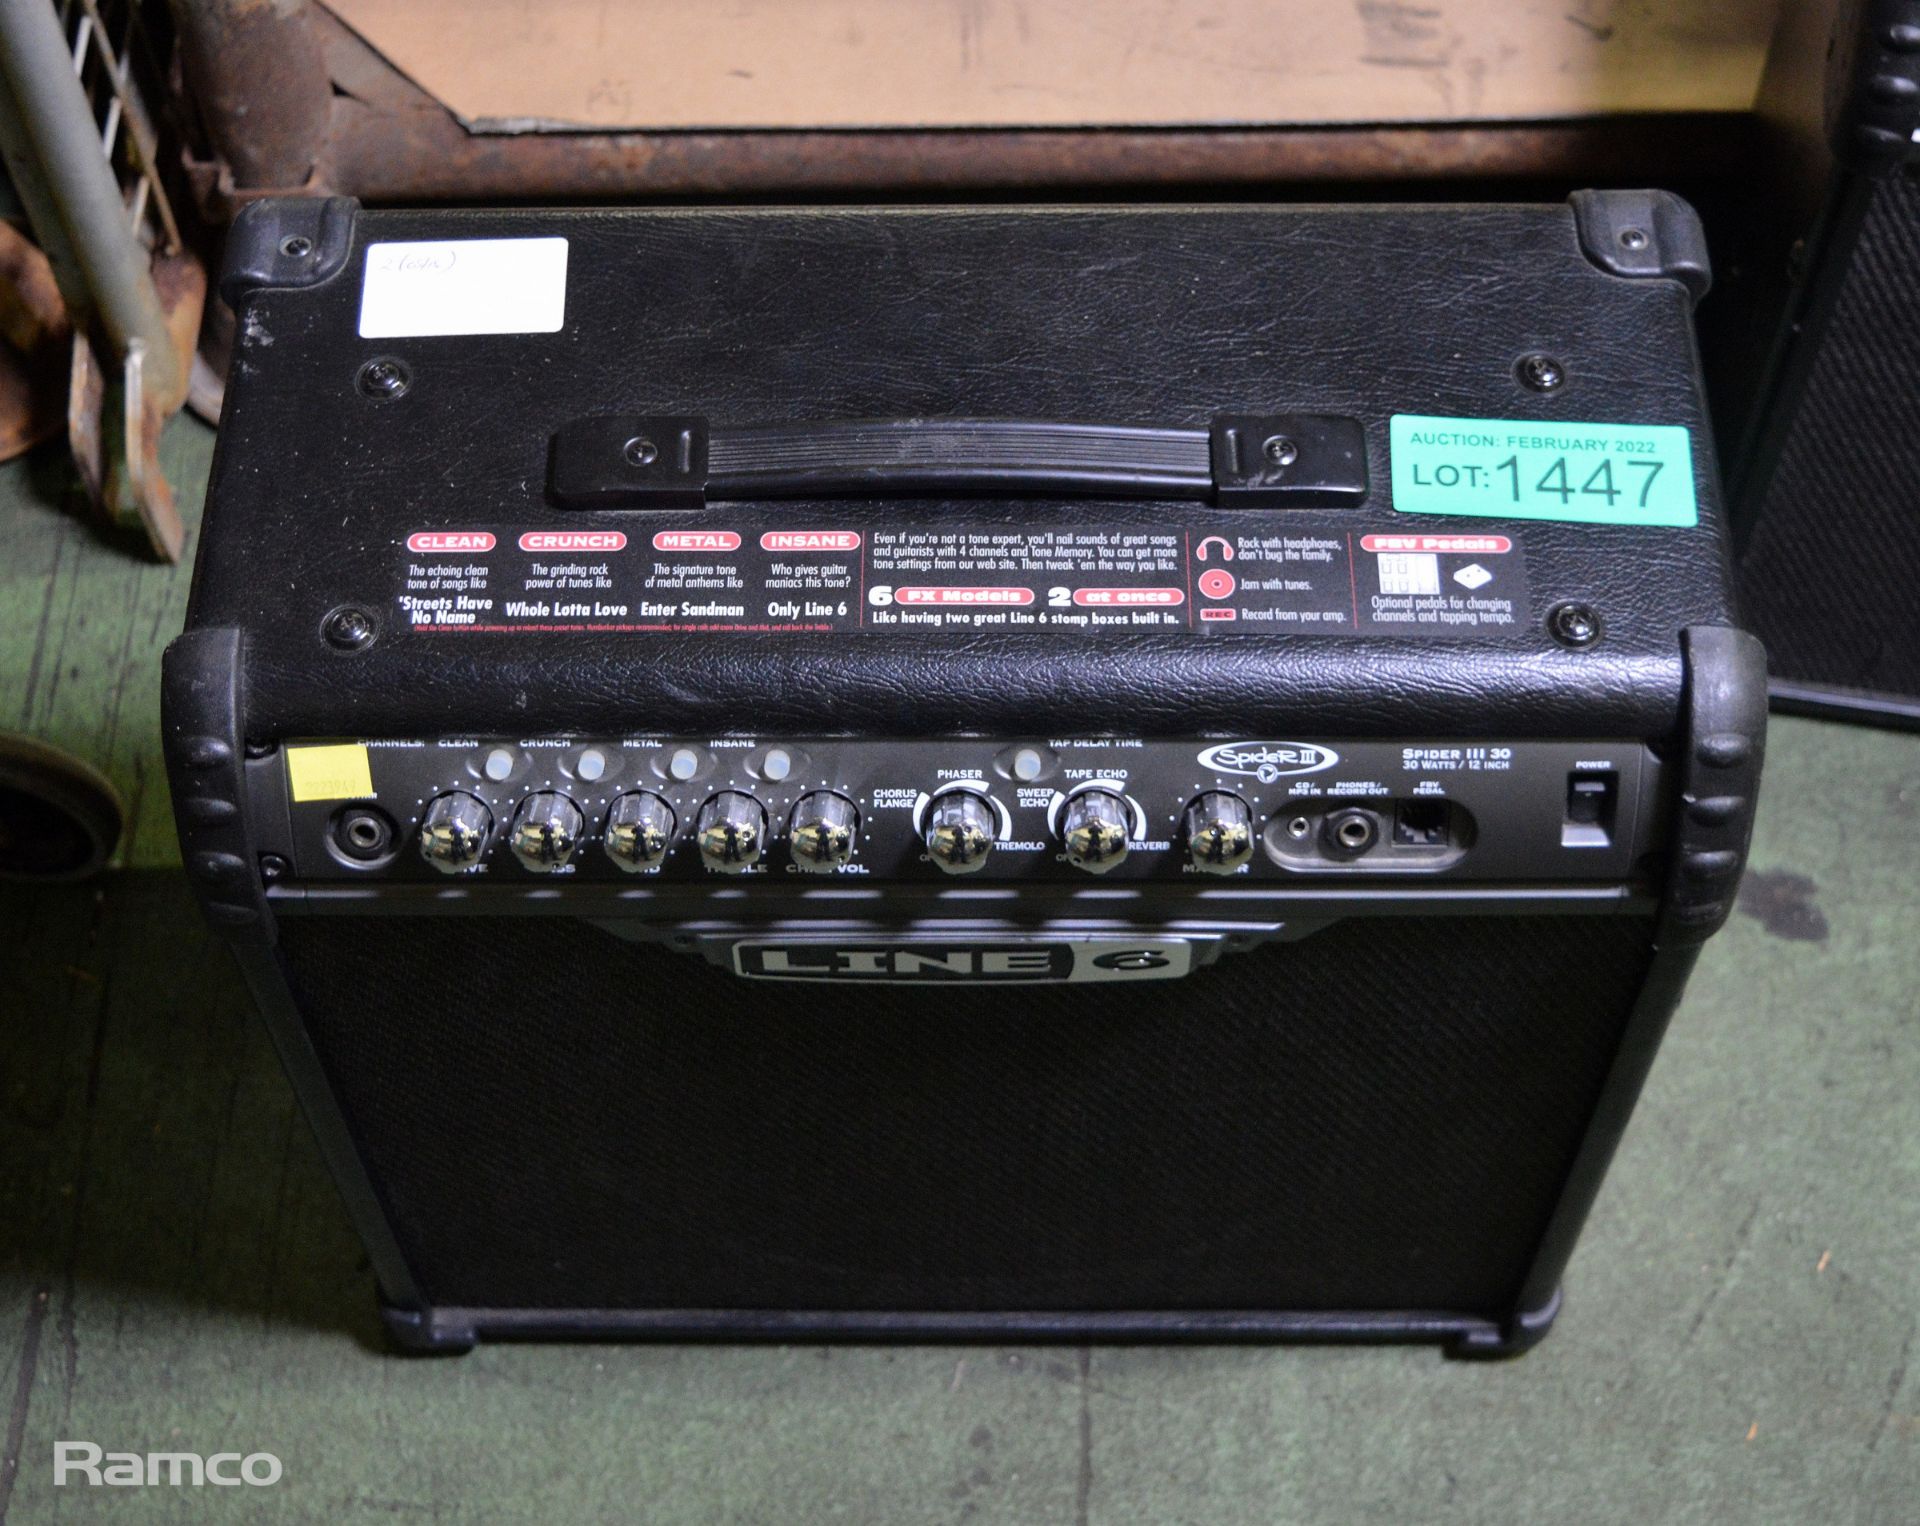 Line 6 Spider III 30, 30 Watt Guitar Amplifier - Missing Power Cable - Image 5 of 5